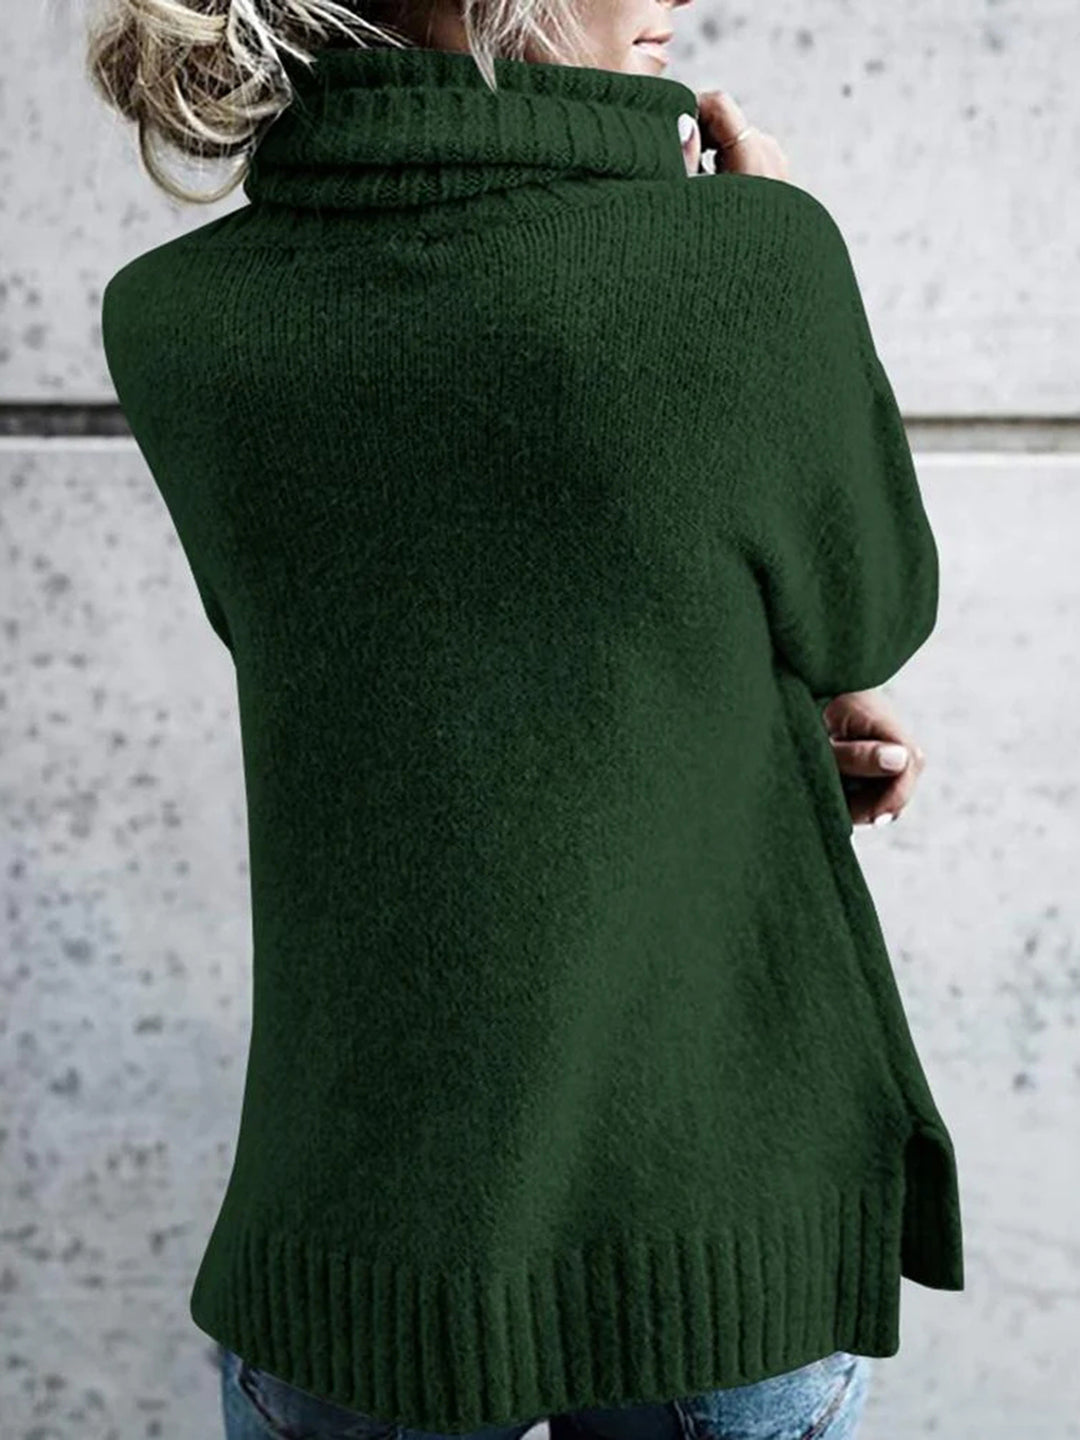 Women's Winter Sweater Fashion Oversized Turtleneck Pullover Cable Knit Long Sleeve Knitwear